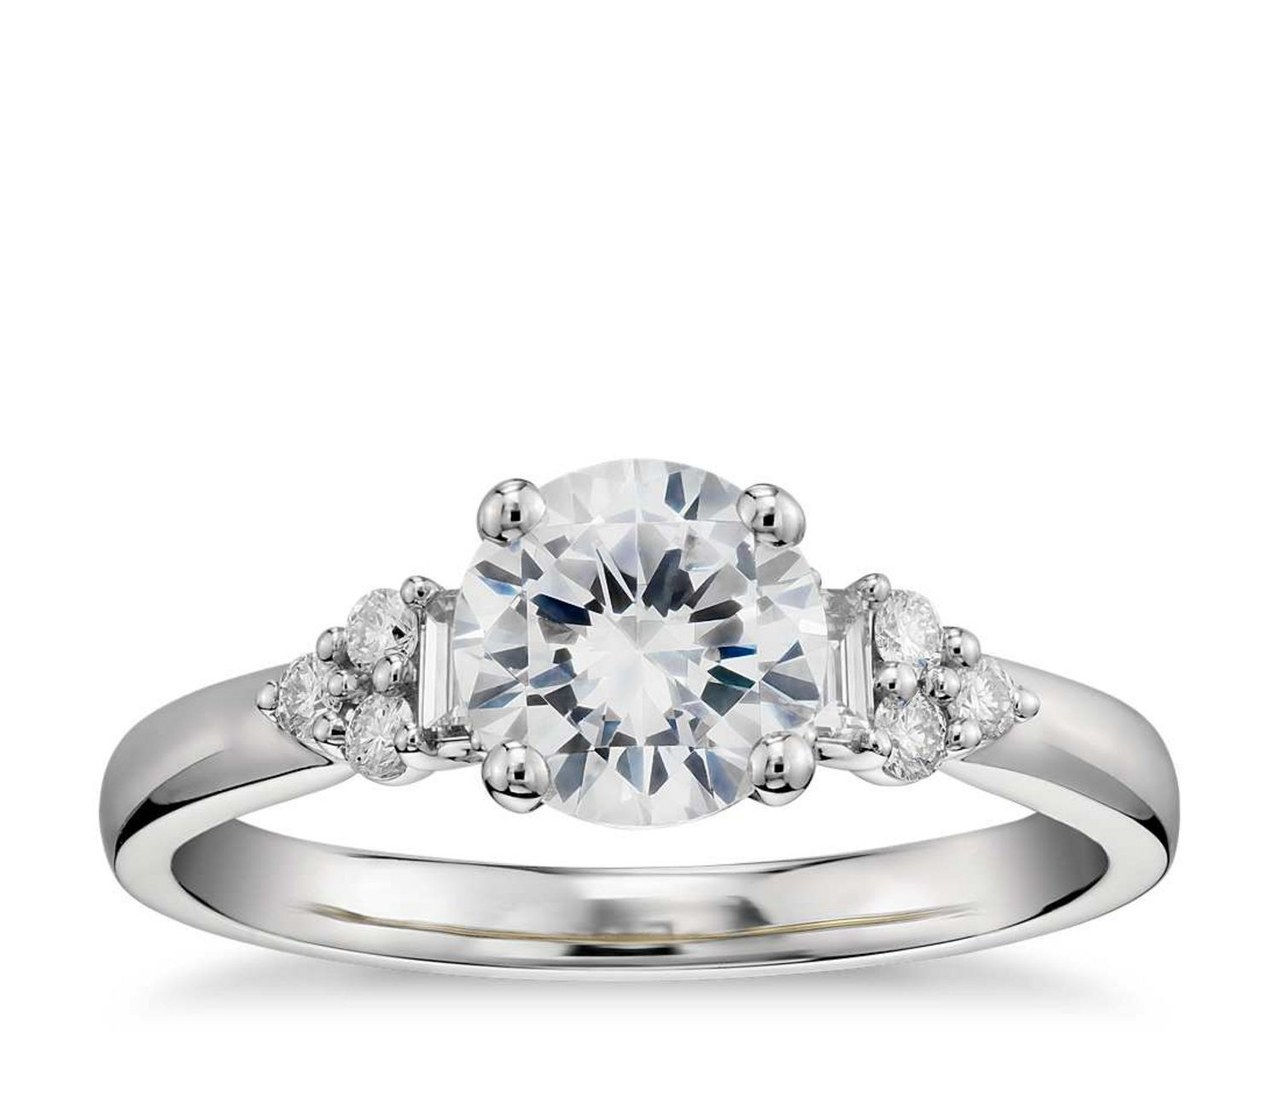 3 zac posen blue nile truly zac posen diamond engagement rings 1113